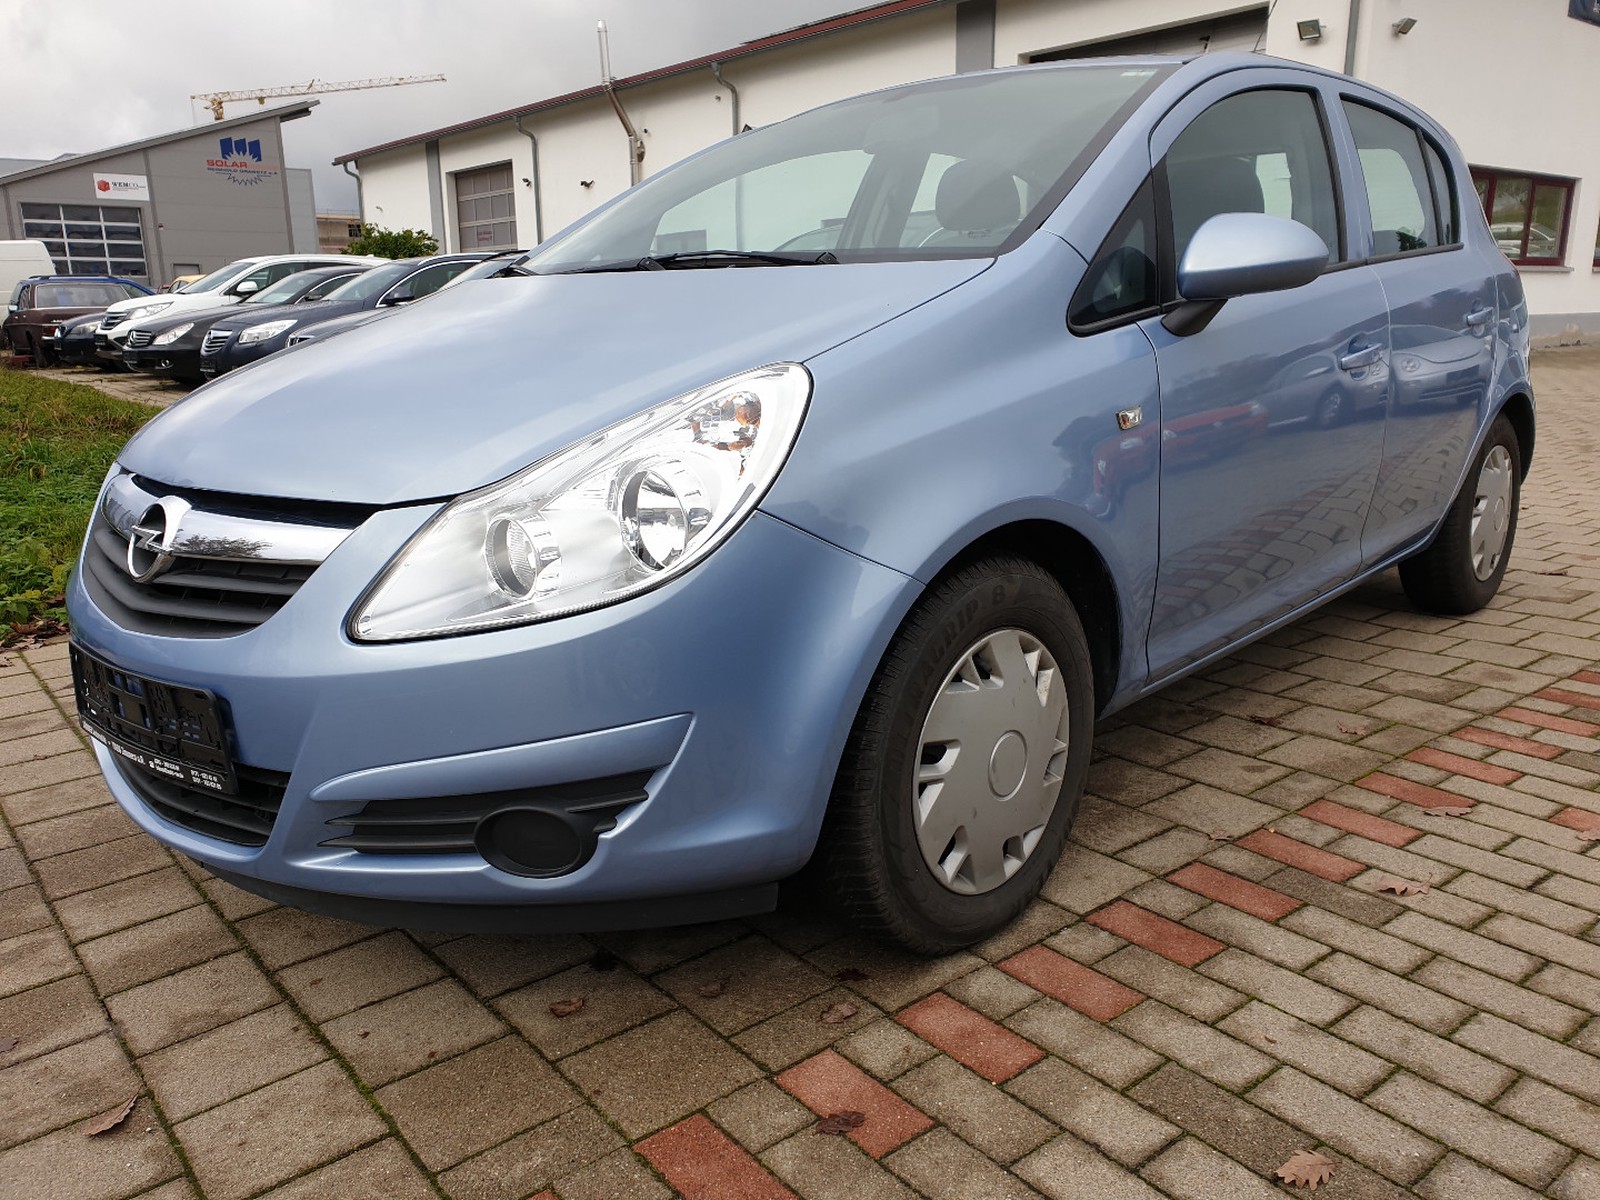 Opel Corsa D Energy gebraucht kaufen in Villingen-Schwenningen Preis 9250  eur - Int.Nr.: VS #0 1 VERKAUFT